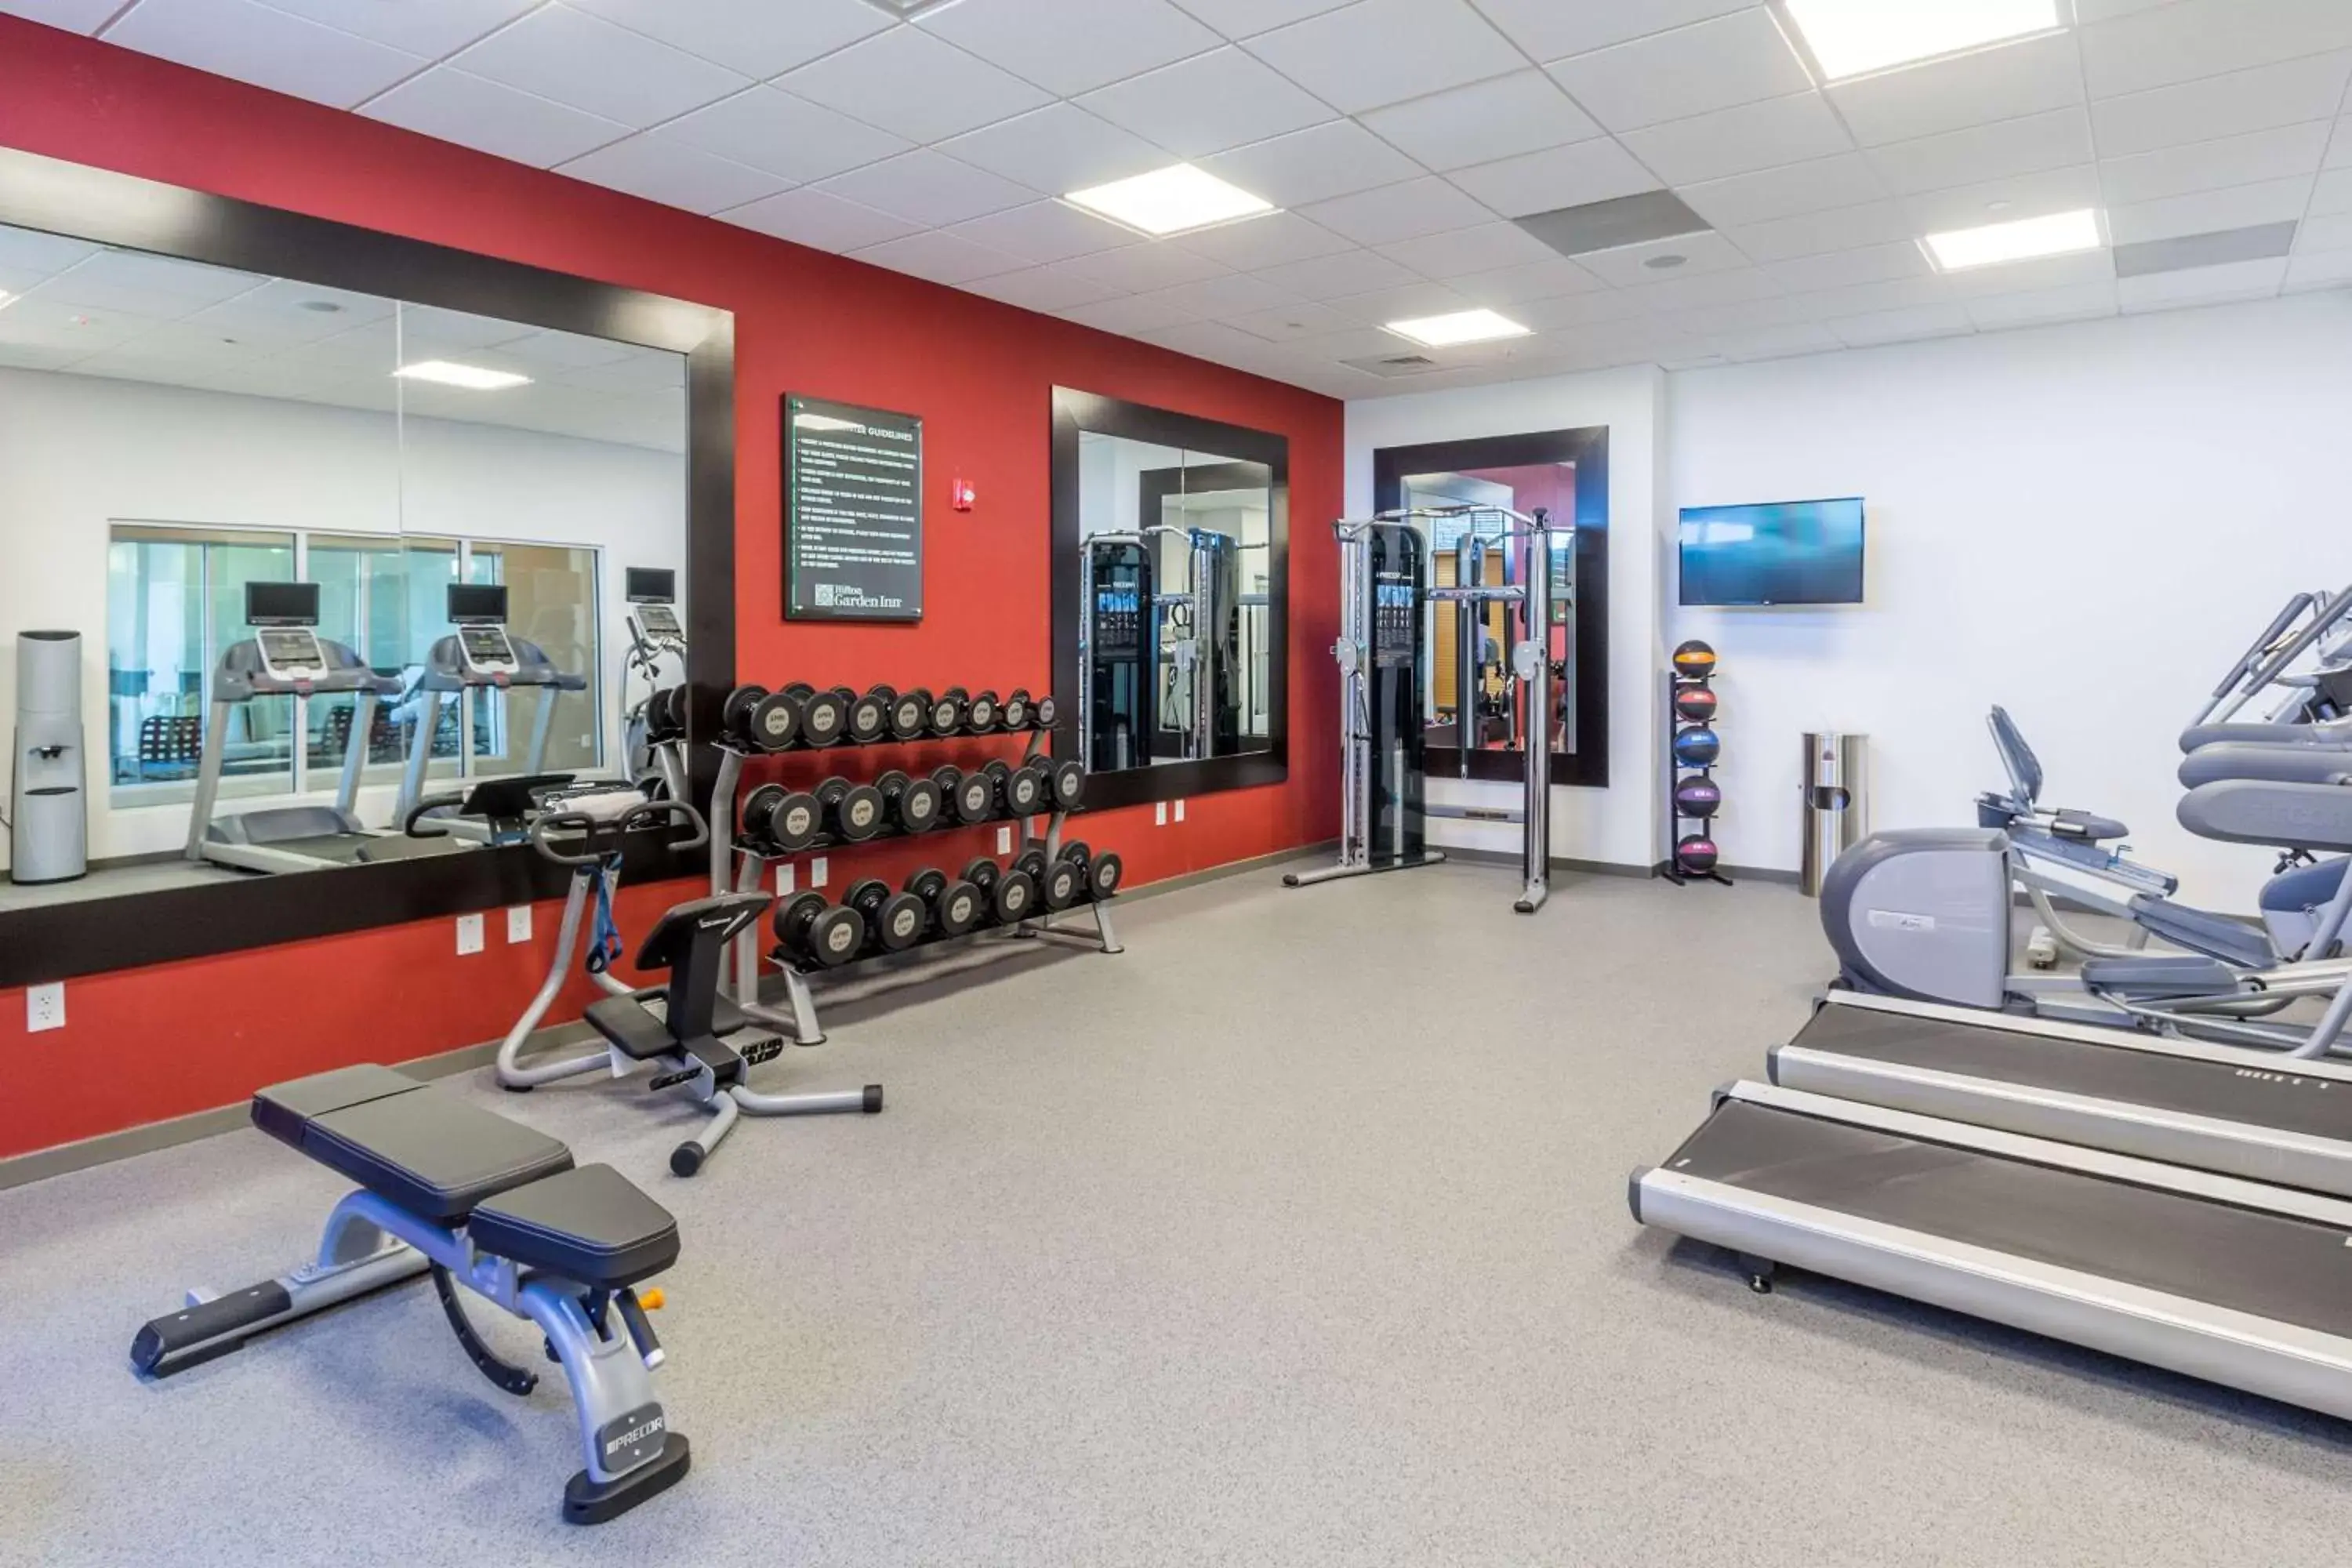 Fitness centre/facilities, Fitness Center/Facilities in Hilton Garden Inn Salina